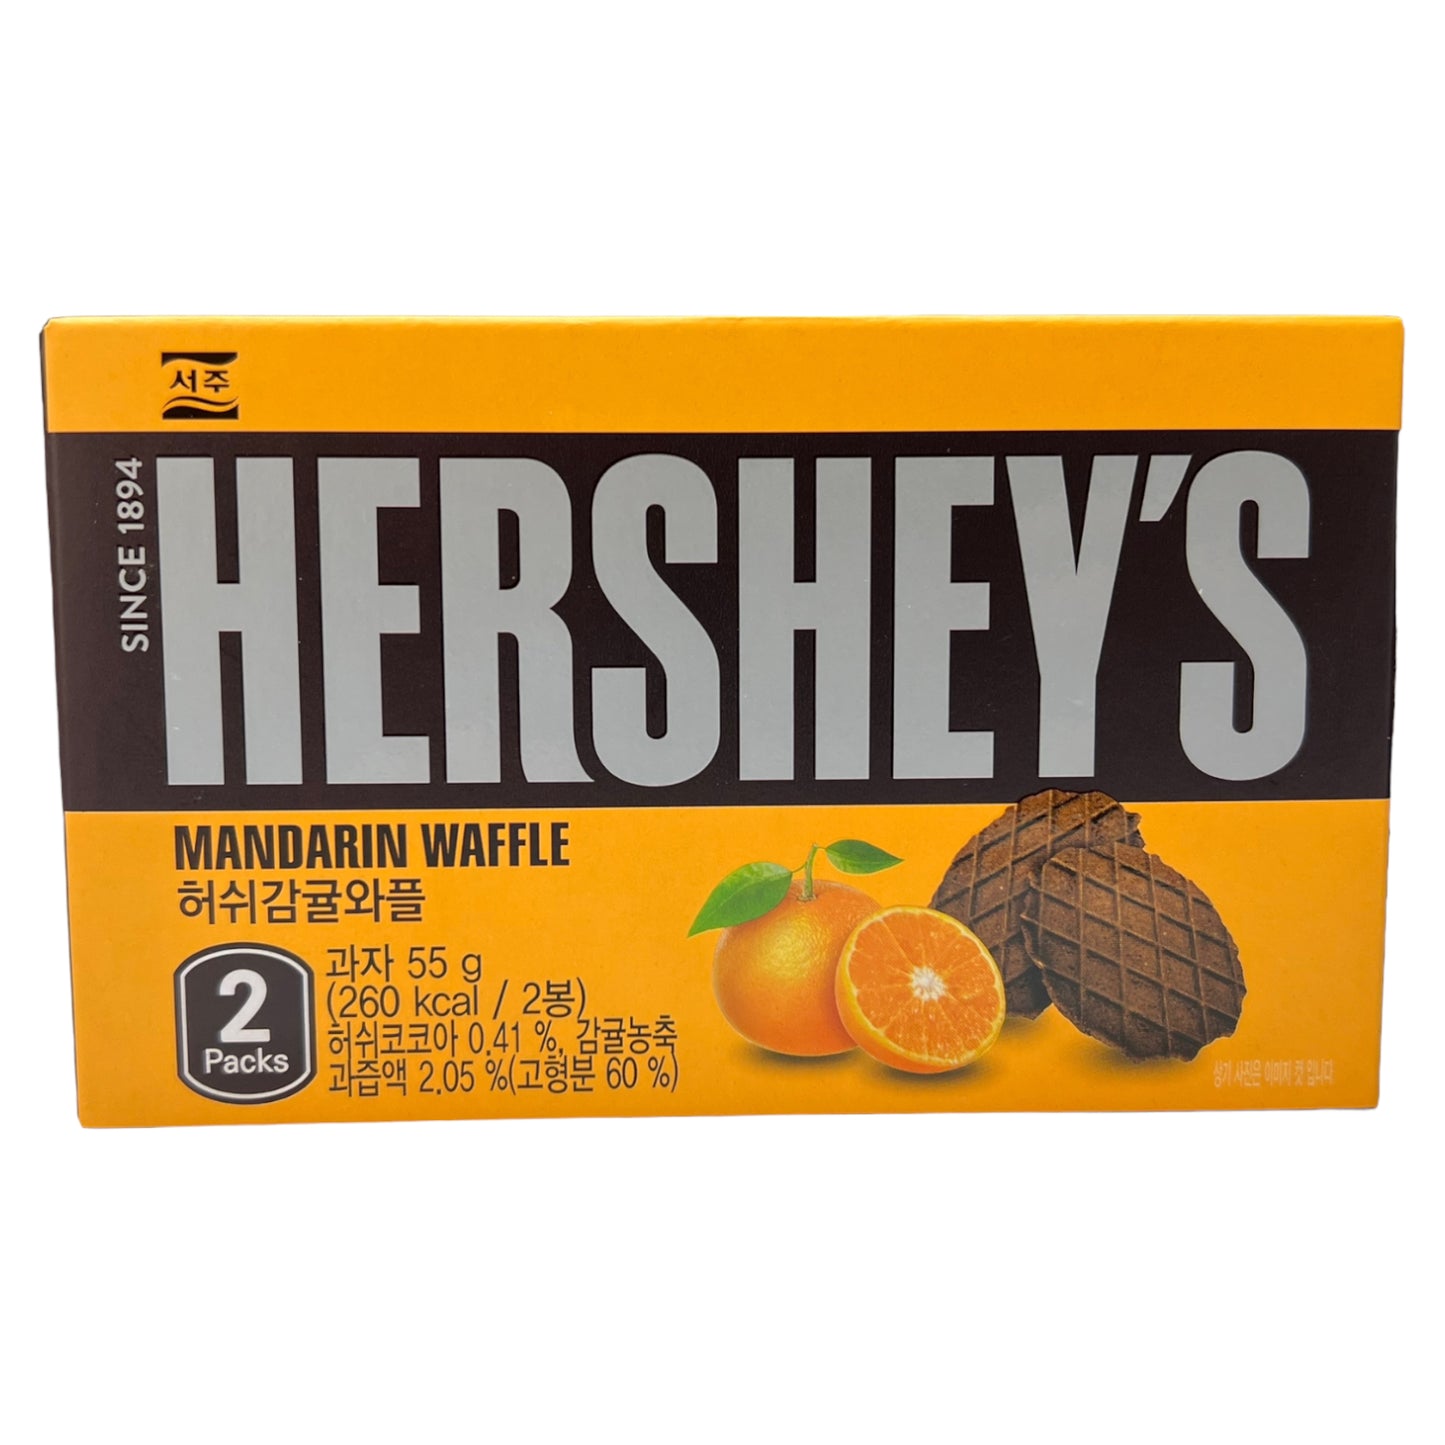 Hersheys Chocolate Biscuit